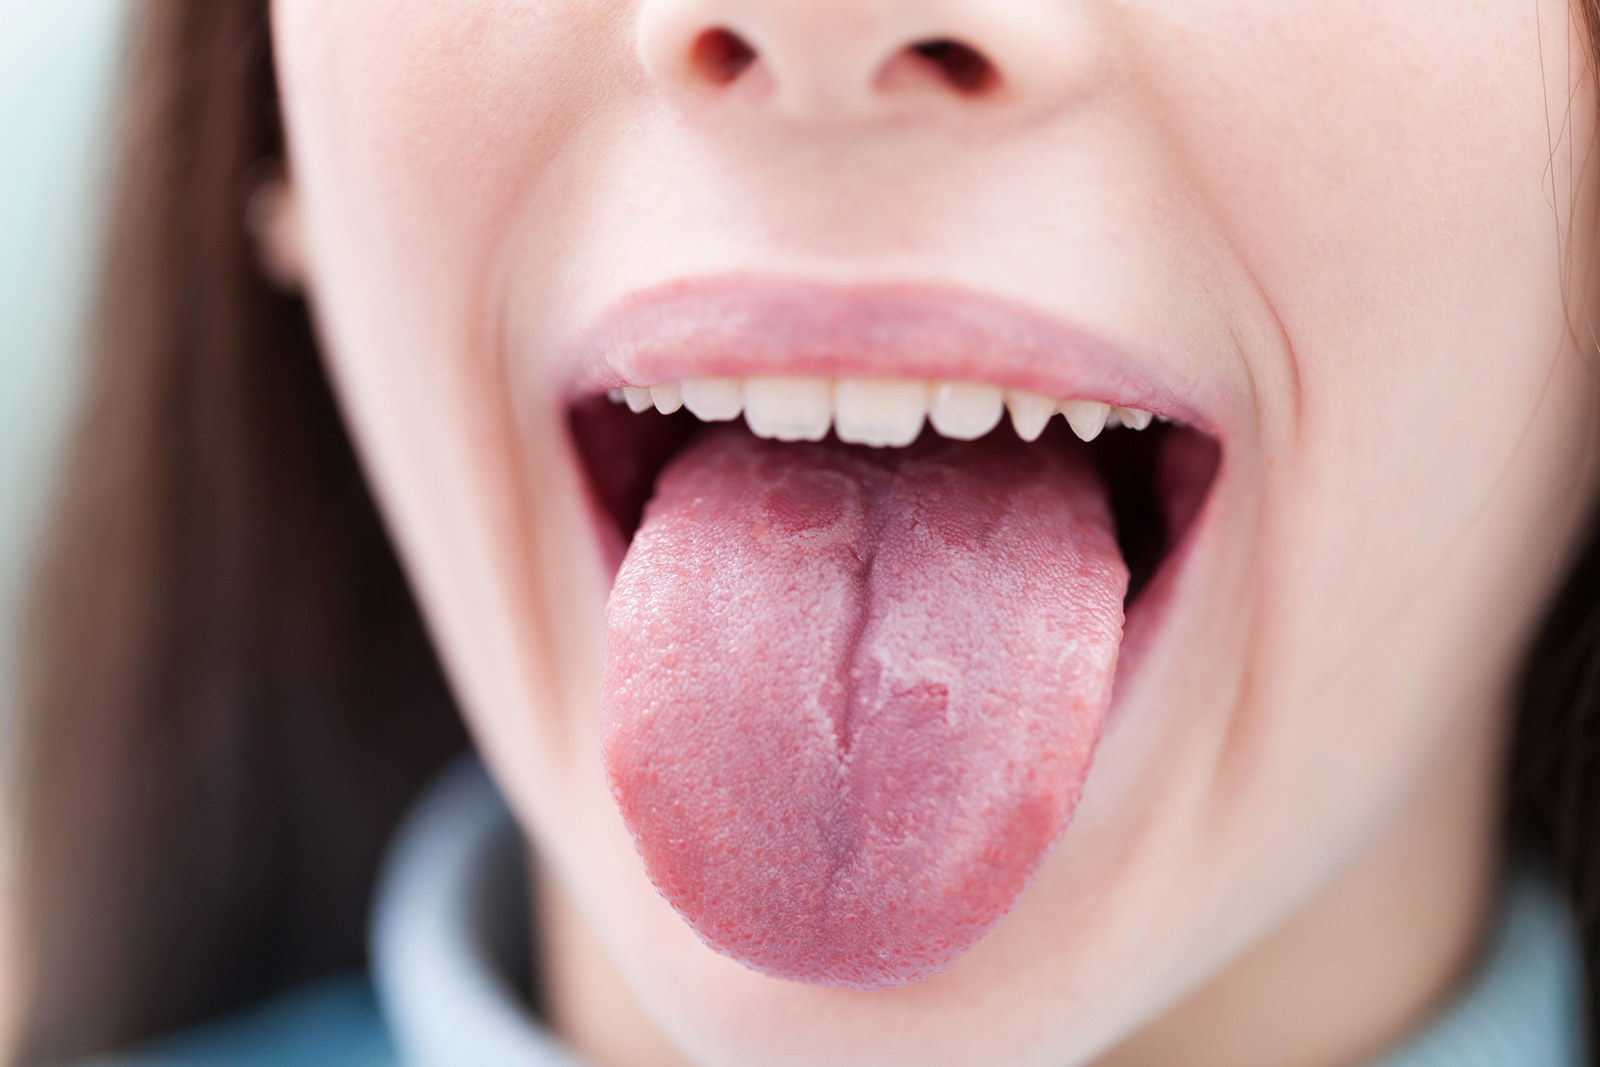 10.You. have a unique tongue print. 